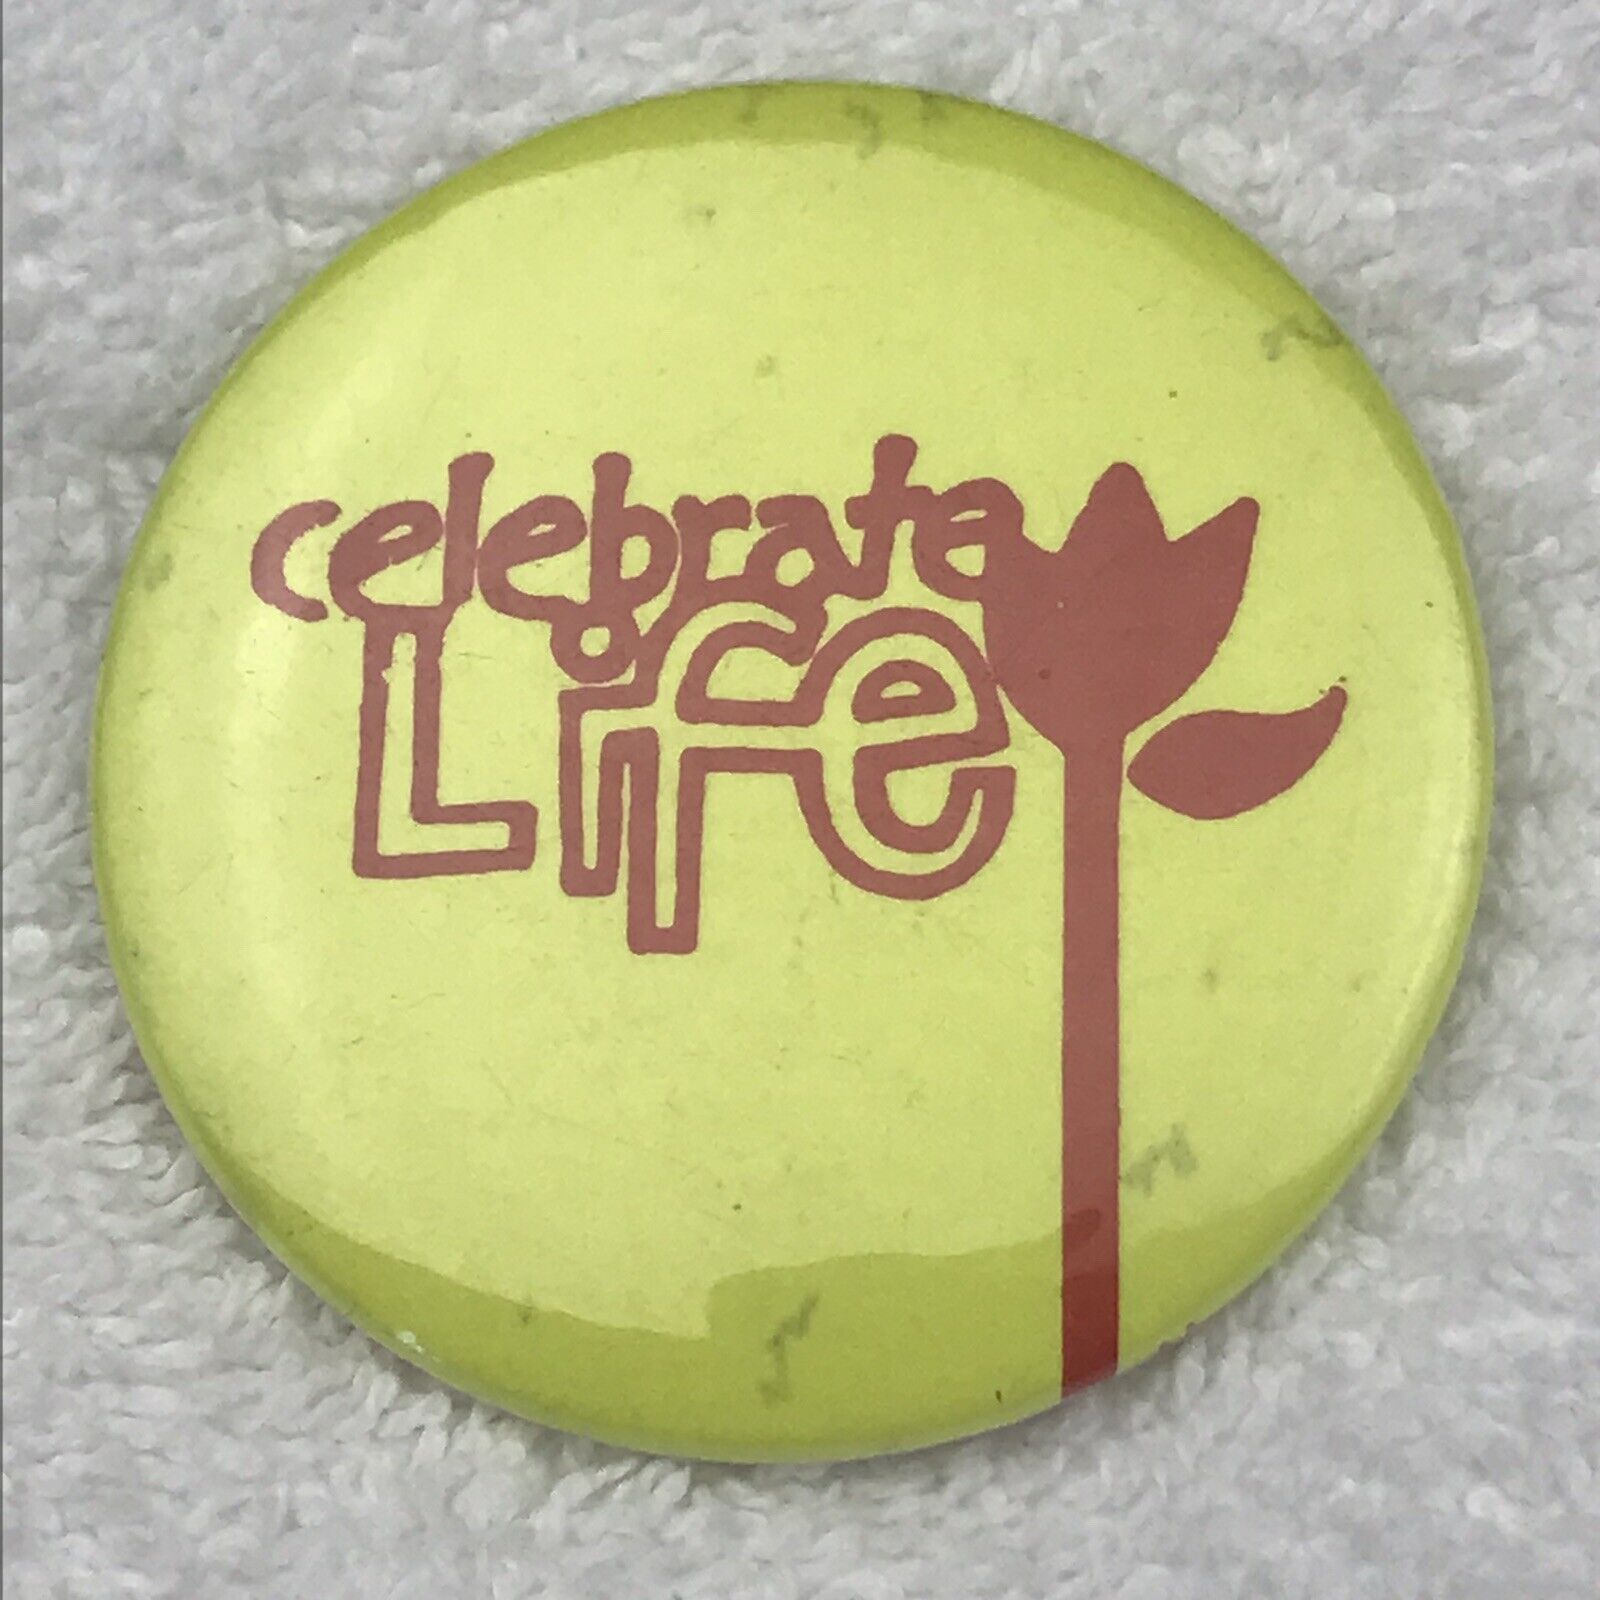 Celebrate Life Vintage Pin Button Pinback